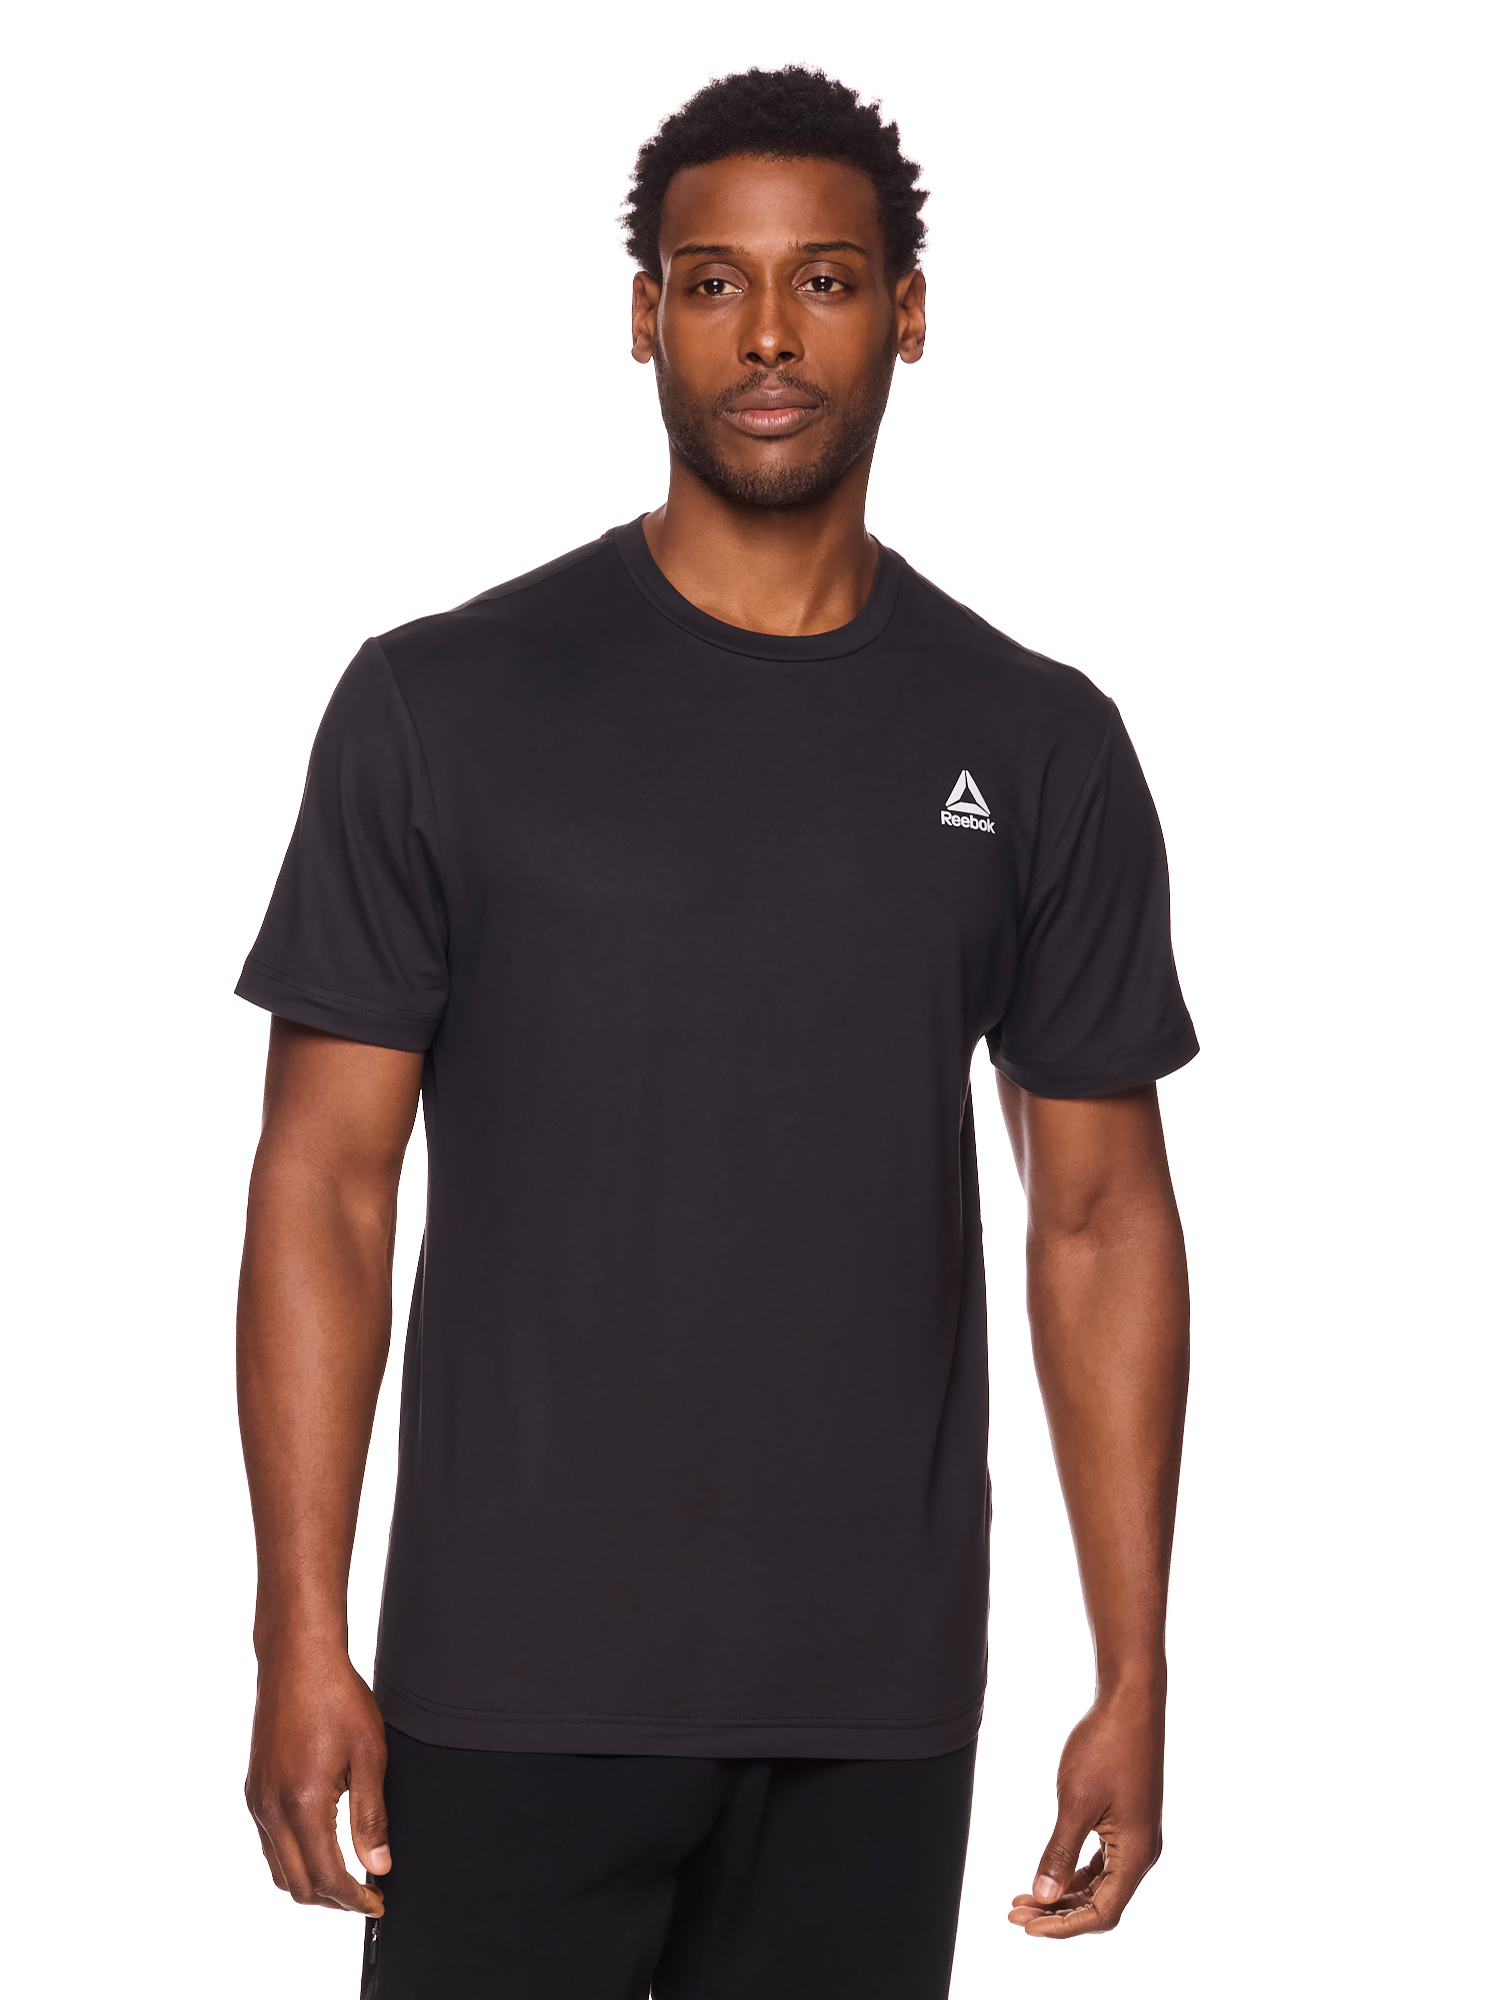 Reebok Men's Stride Performance T-Shirts, up to Size 3XL - Walmart.com